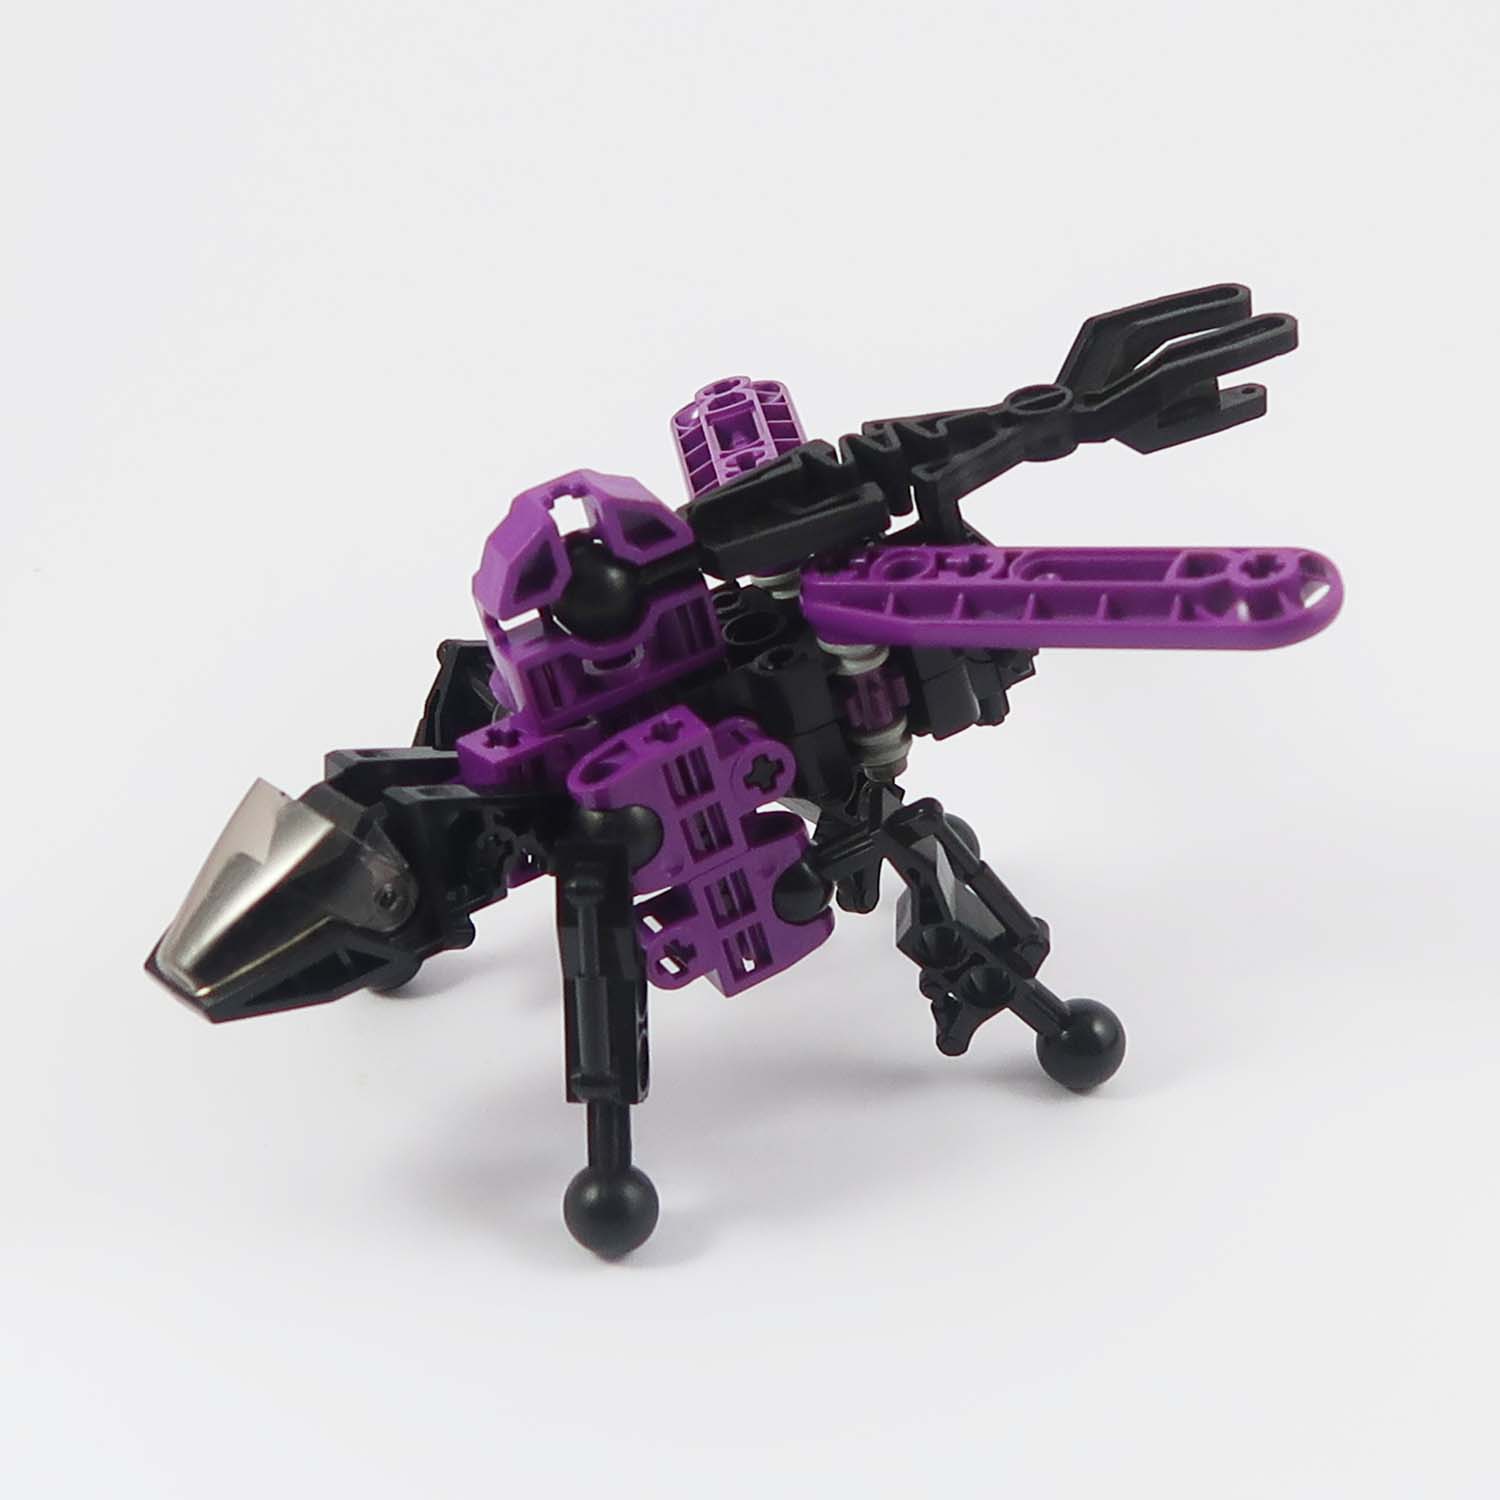 LEGO Technic - Energy Slizer (8507)